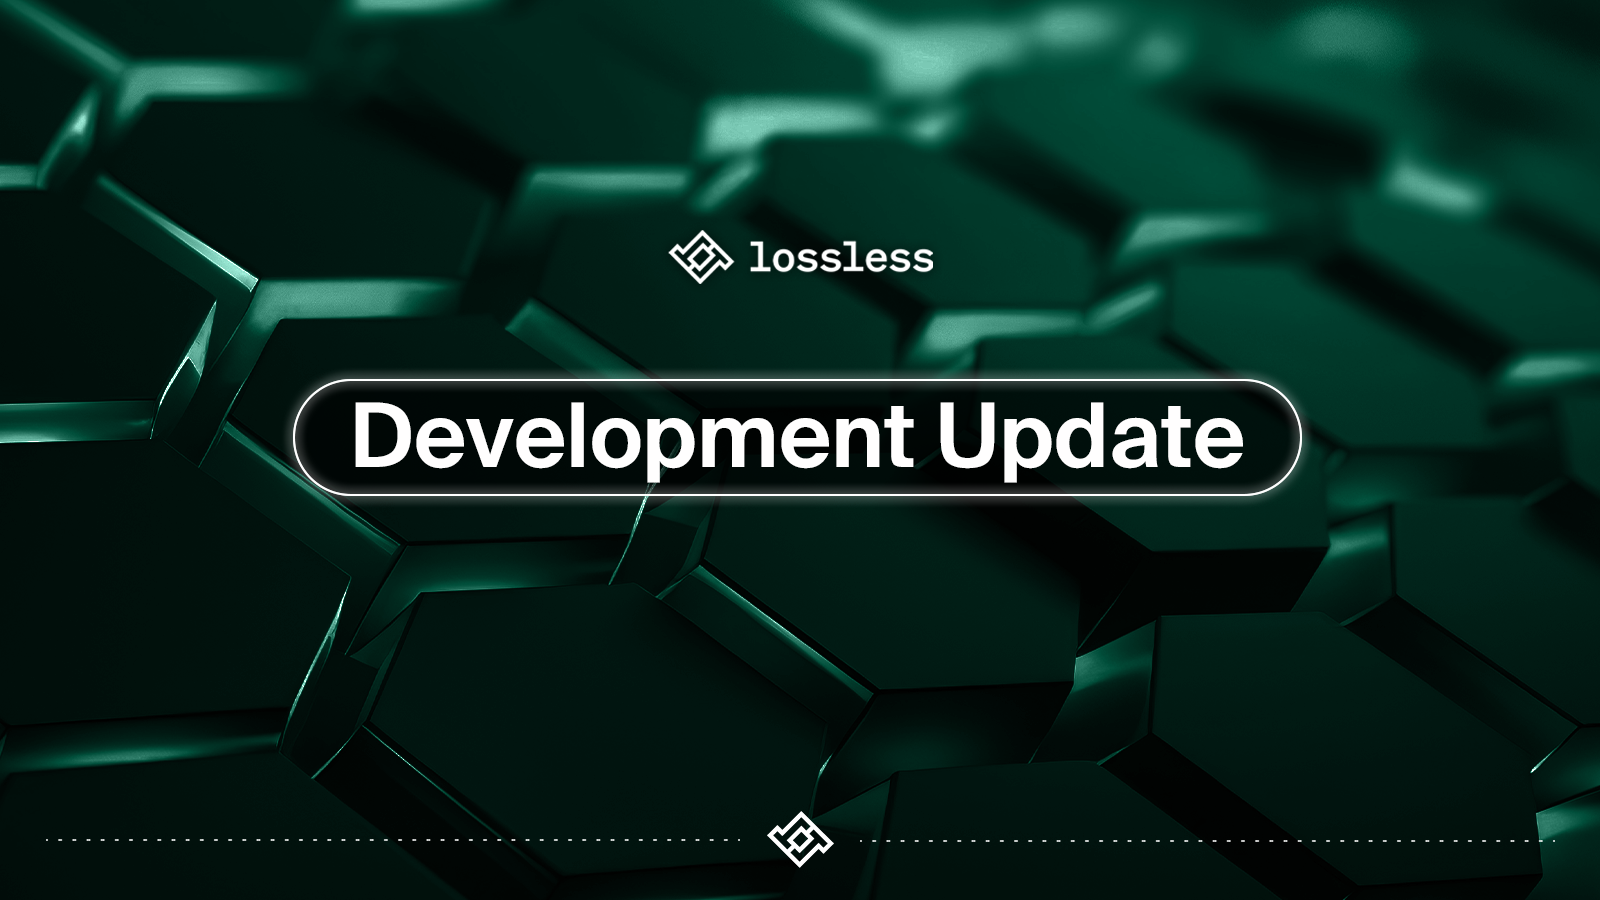 The Latest Development Update